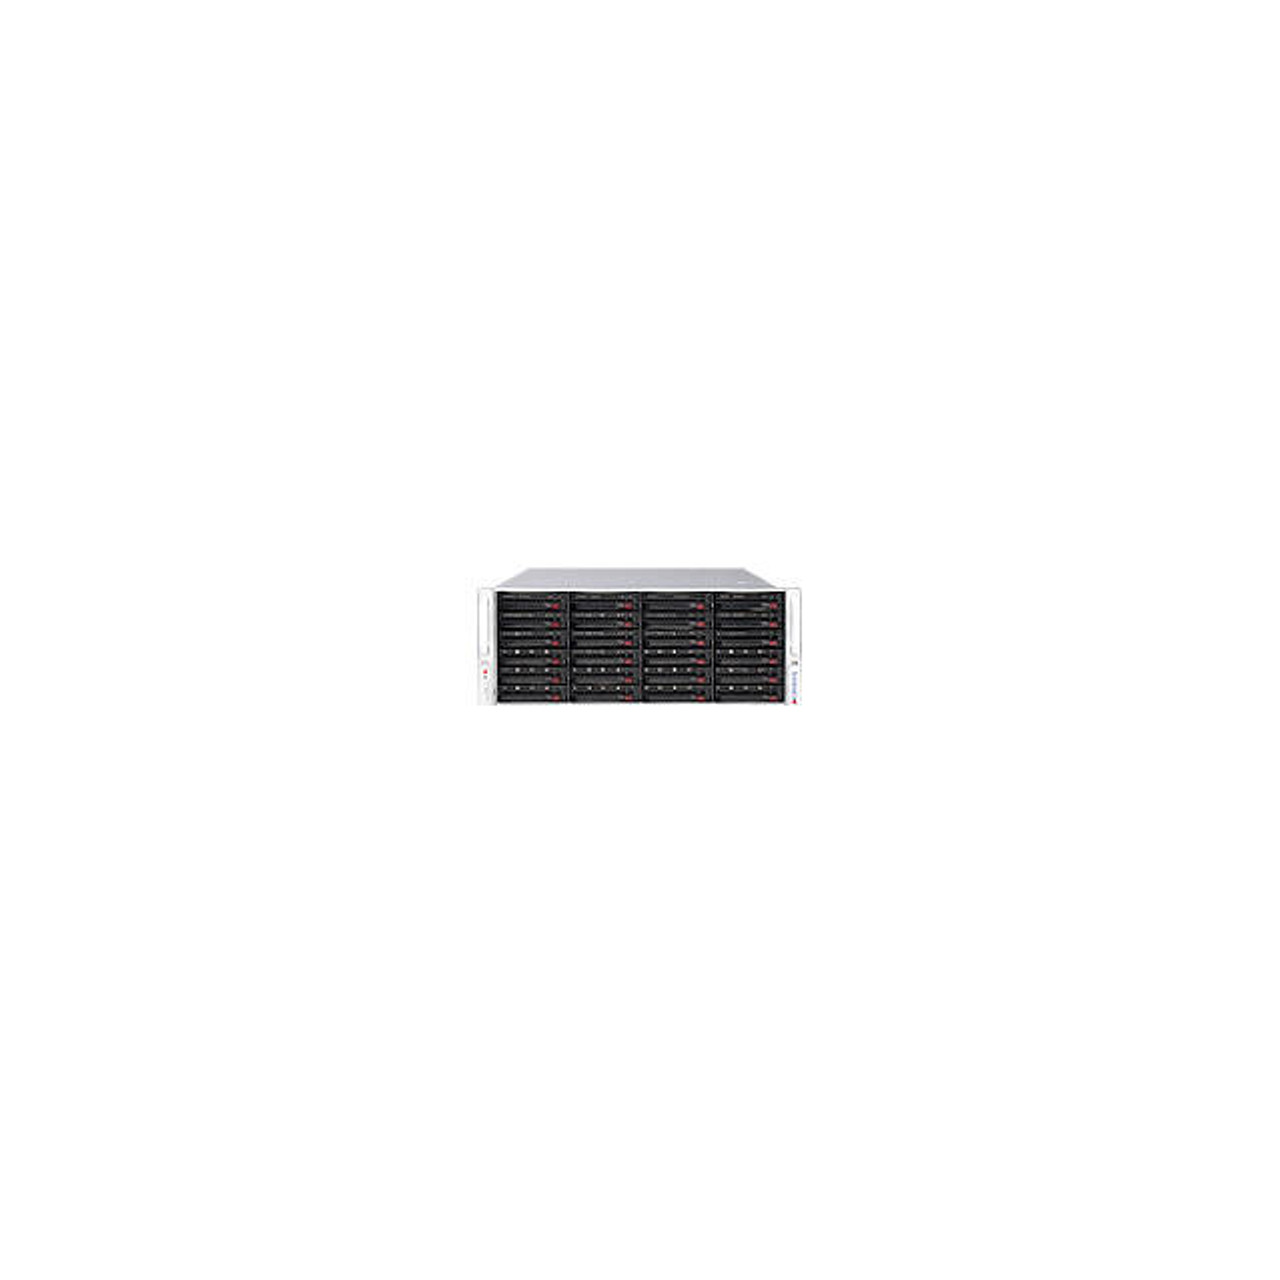 Supermicro SuperChassis CSE-846A-R1200B 1200W 4U Rackmount Server Chassis (Black)